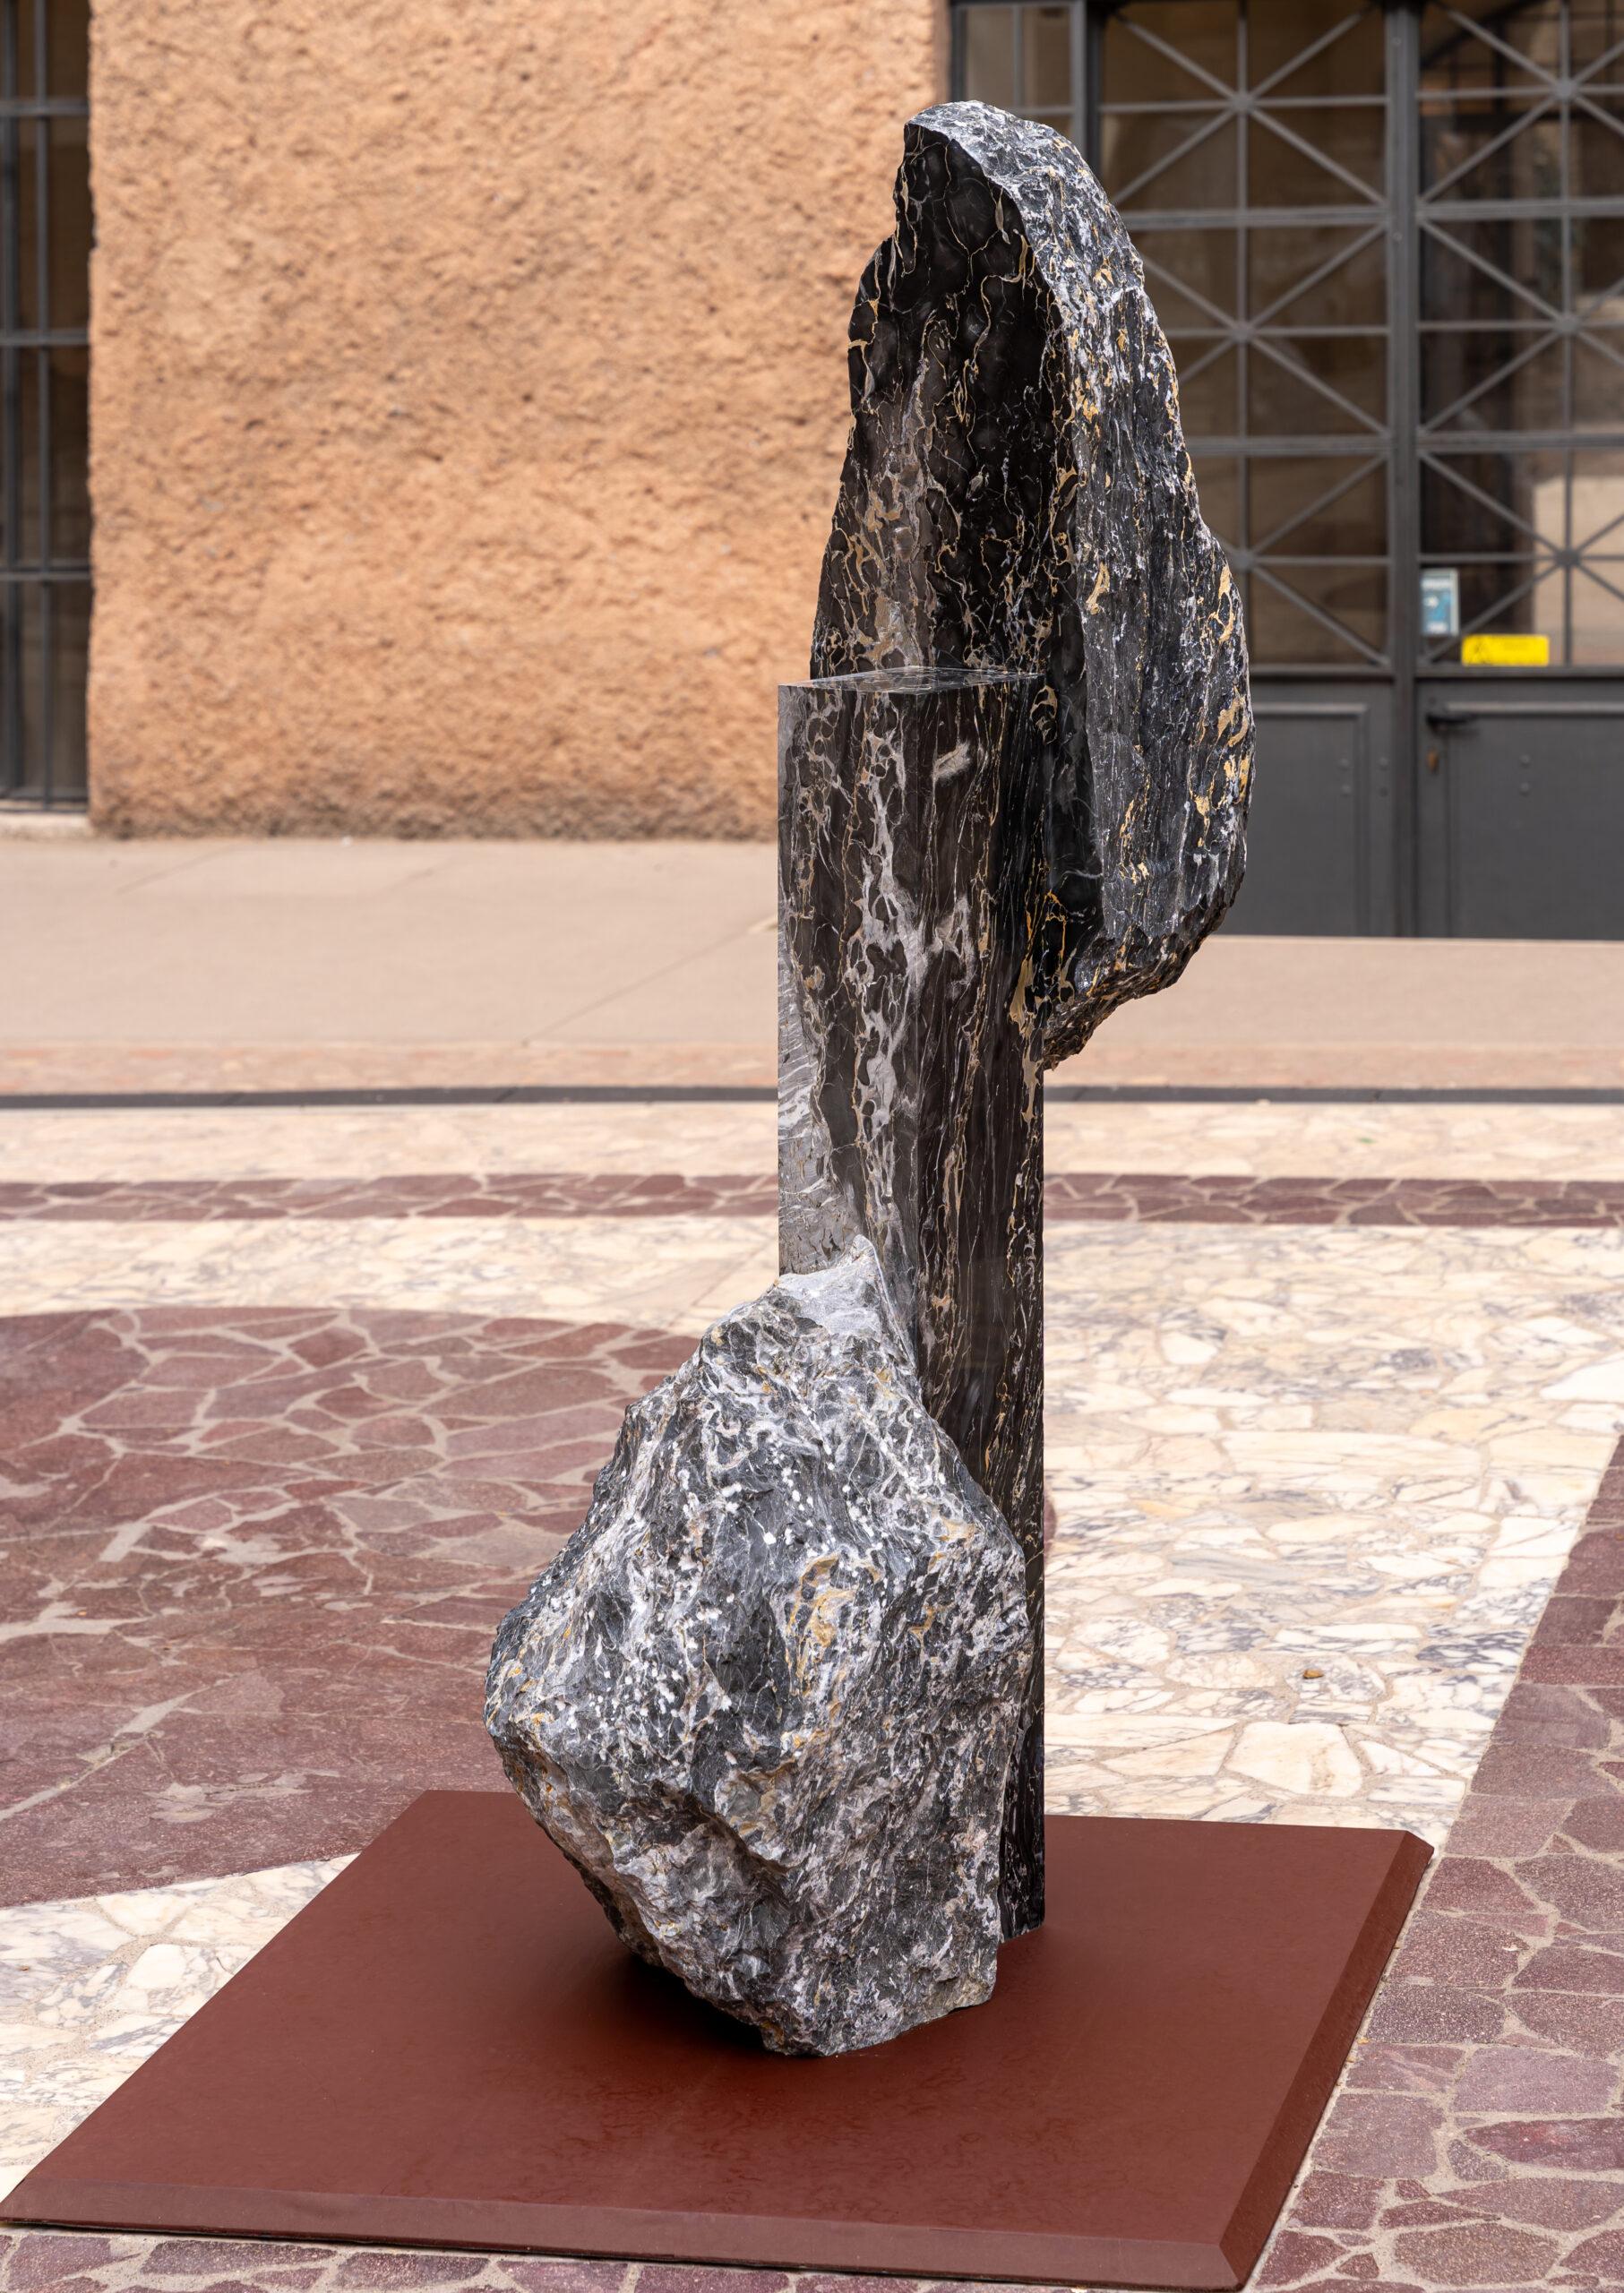 Korè-Portovenere Portoro is a unique monumental sculpture by contemporary artist Mattia Bosco. This sculpture is made of Portovenere Portoro marble, dimensions are 164.5 × 45 × 79 cm (64.8 × 17.7 × 31.1 in). 

This piece is a part of a collection of